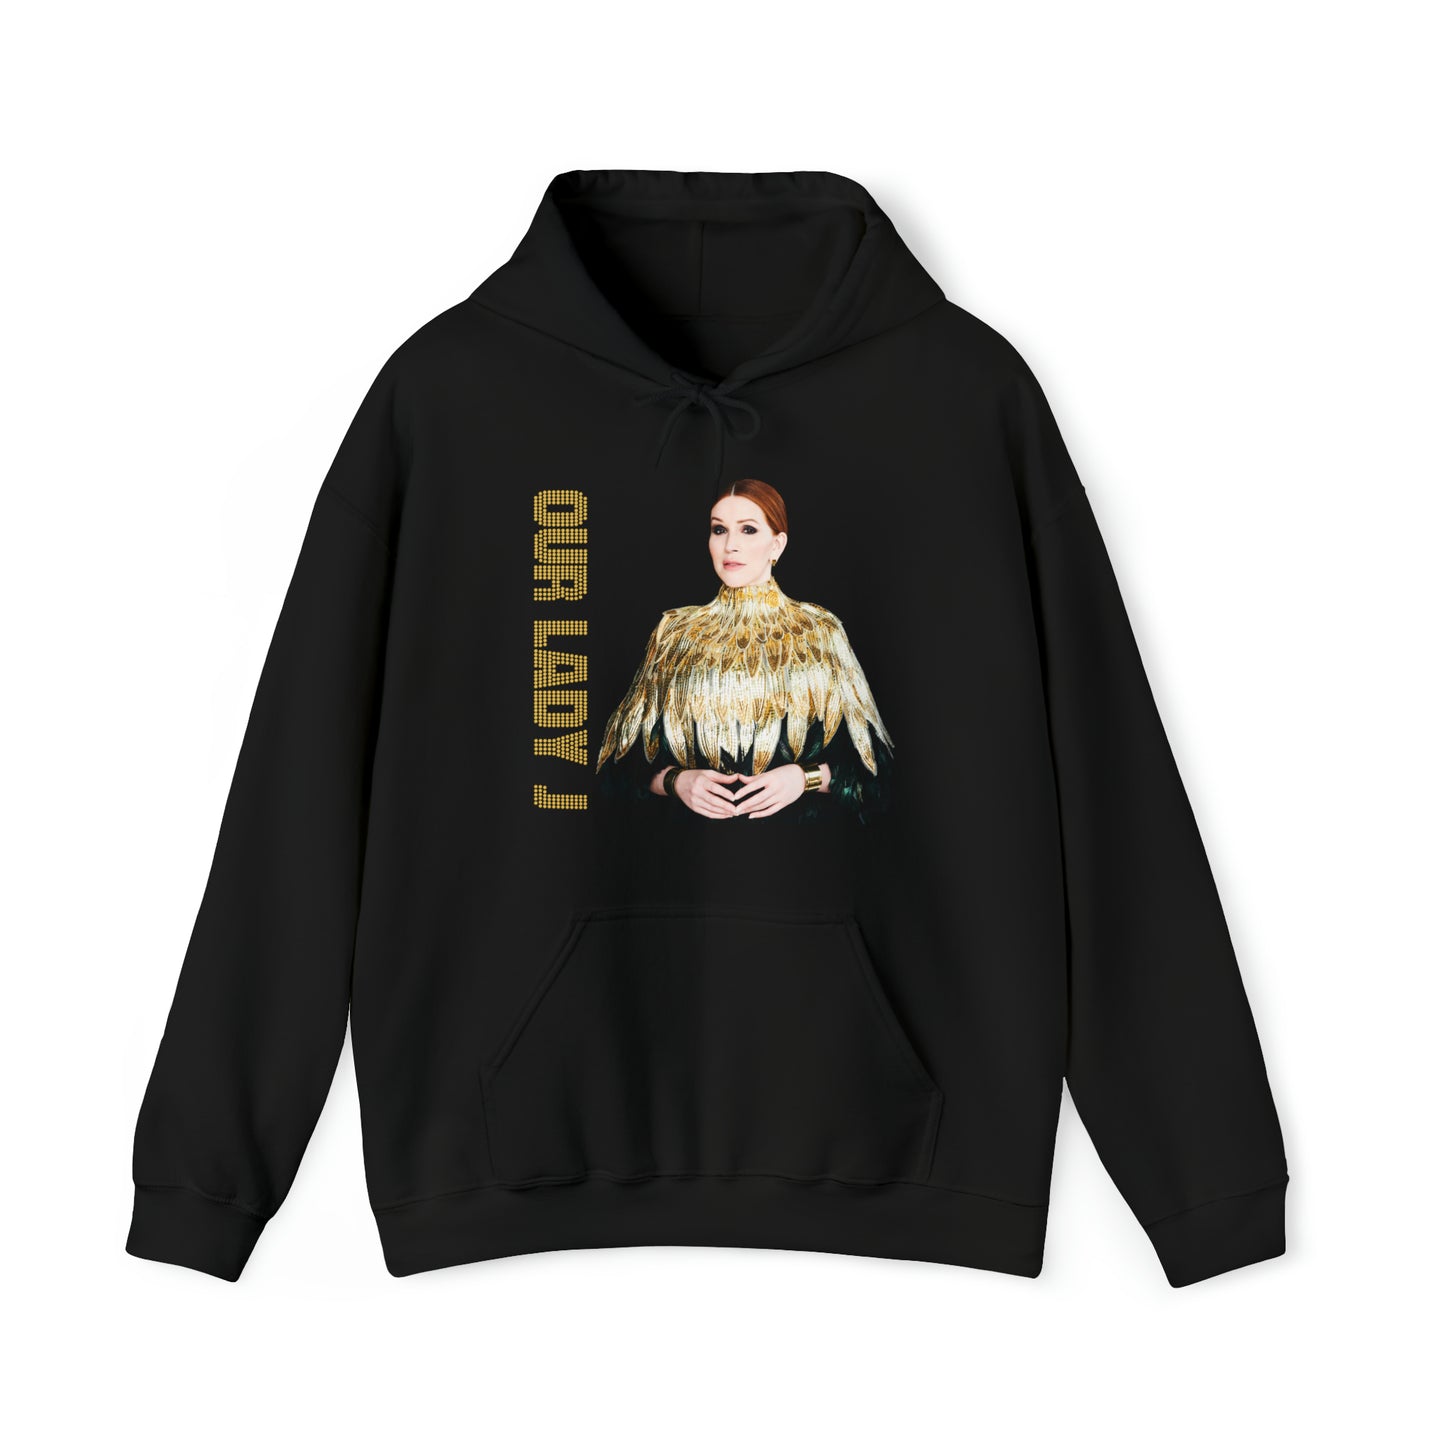 Our Lady J "Golden Wing" Heavy Blend™ Hooded Sweatshirt